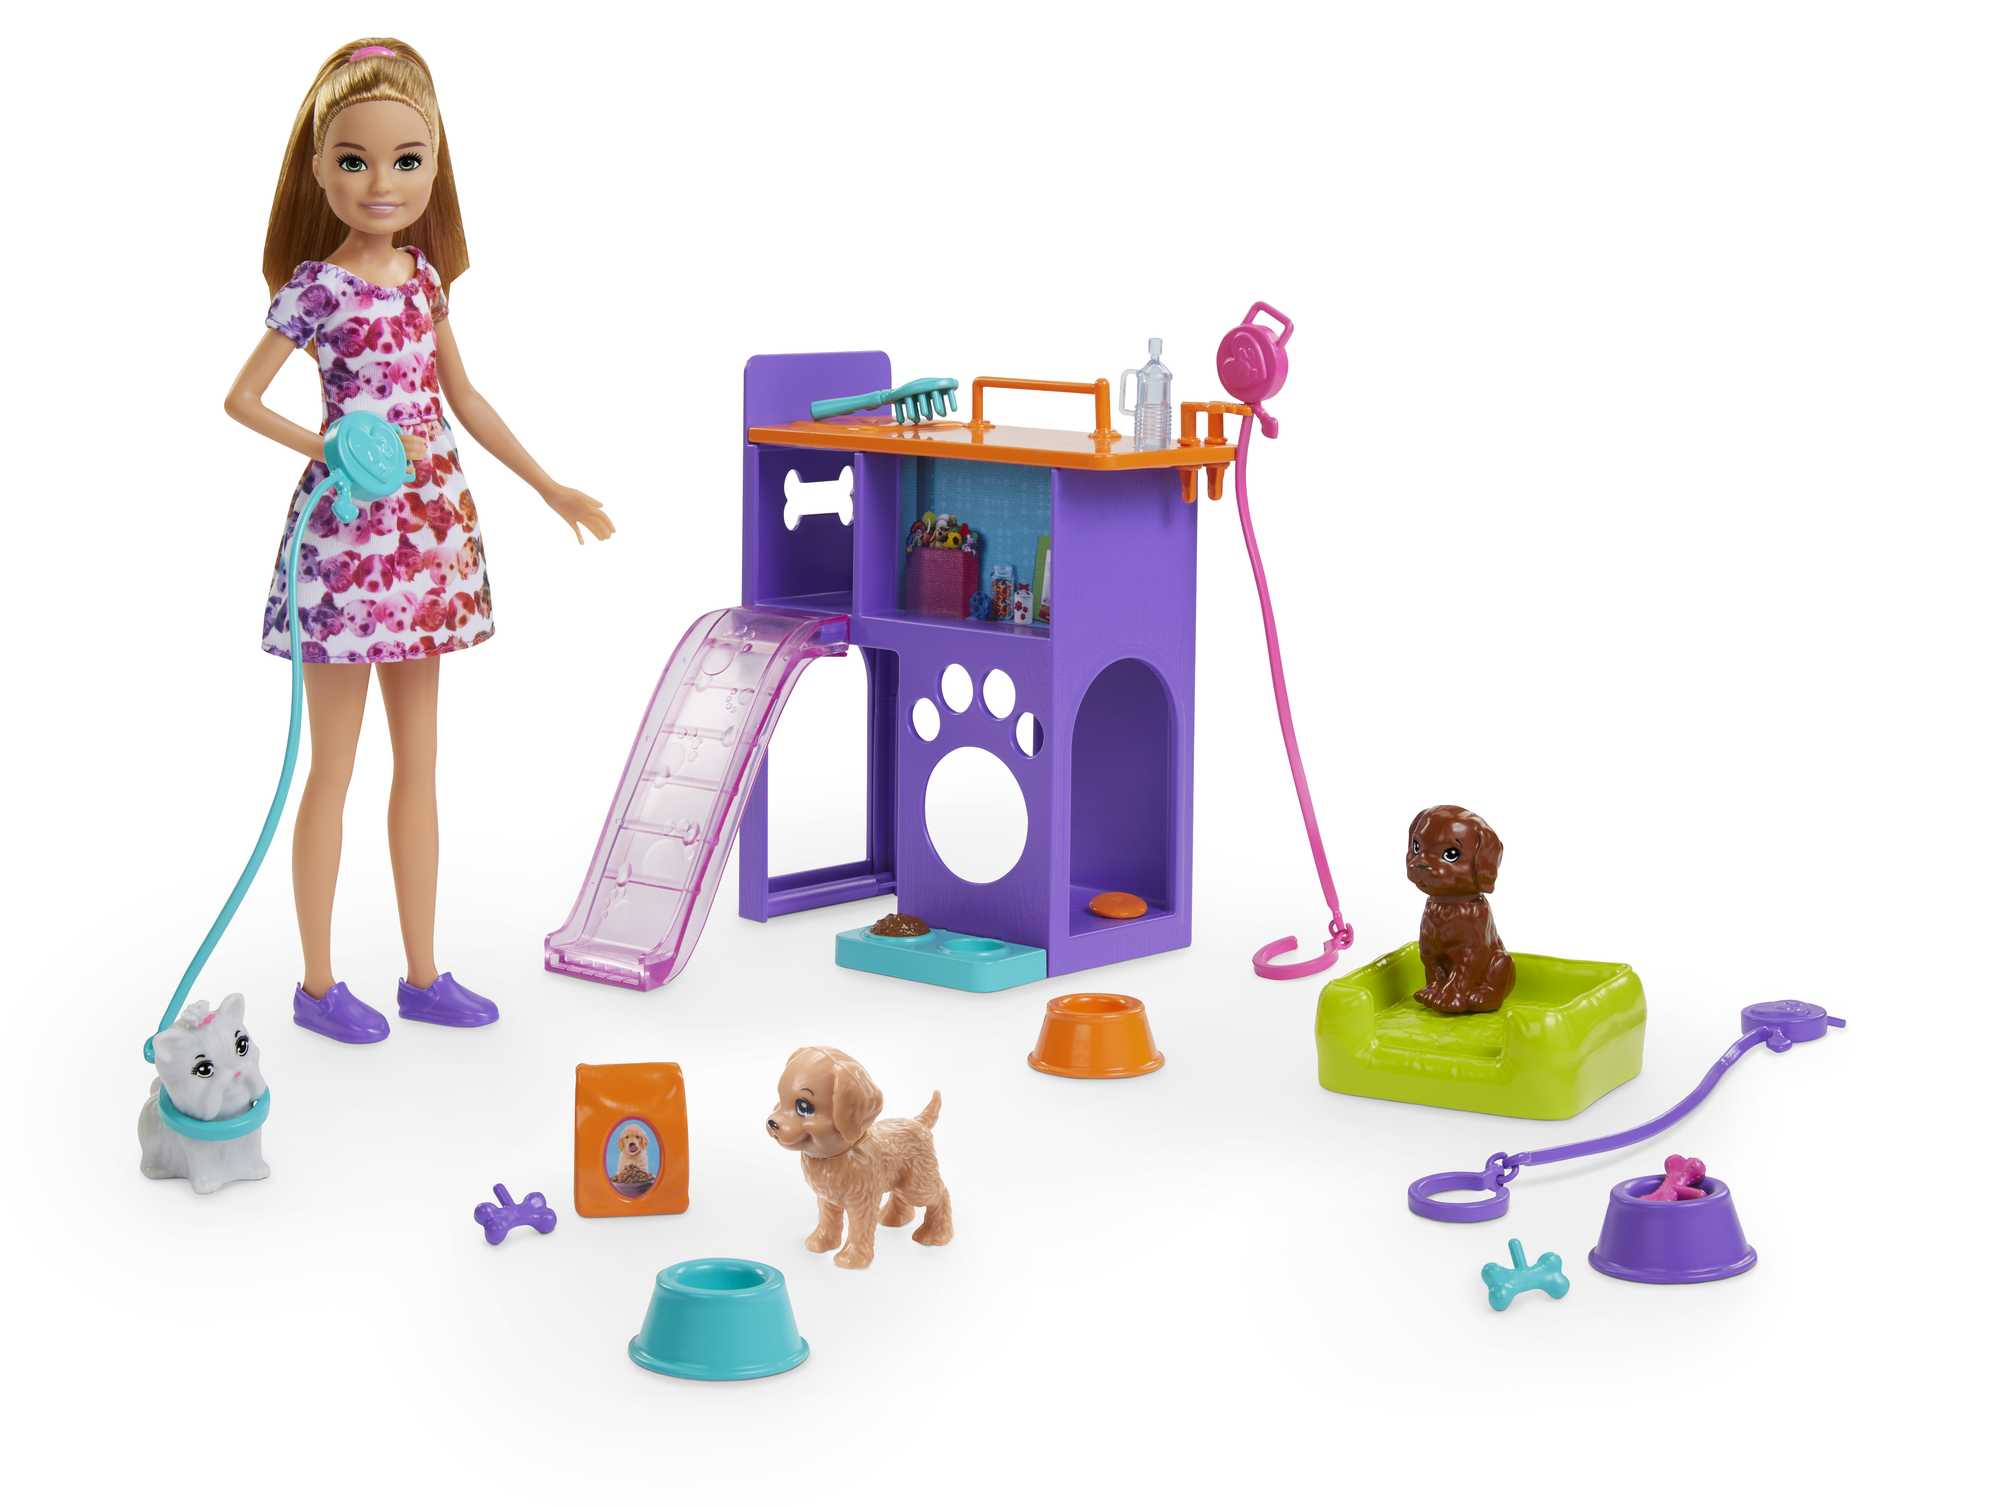 Barbie Team Stacie Doll and Accessories GFF48 | Mattel